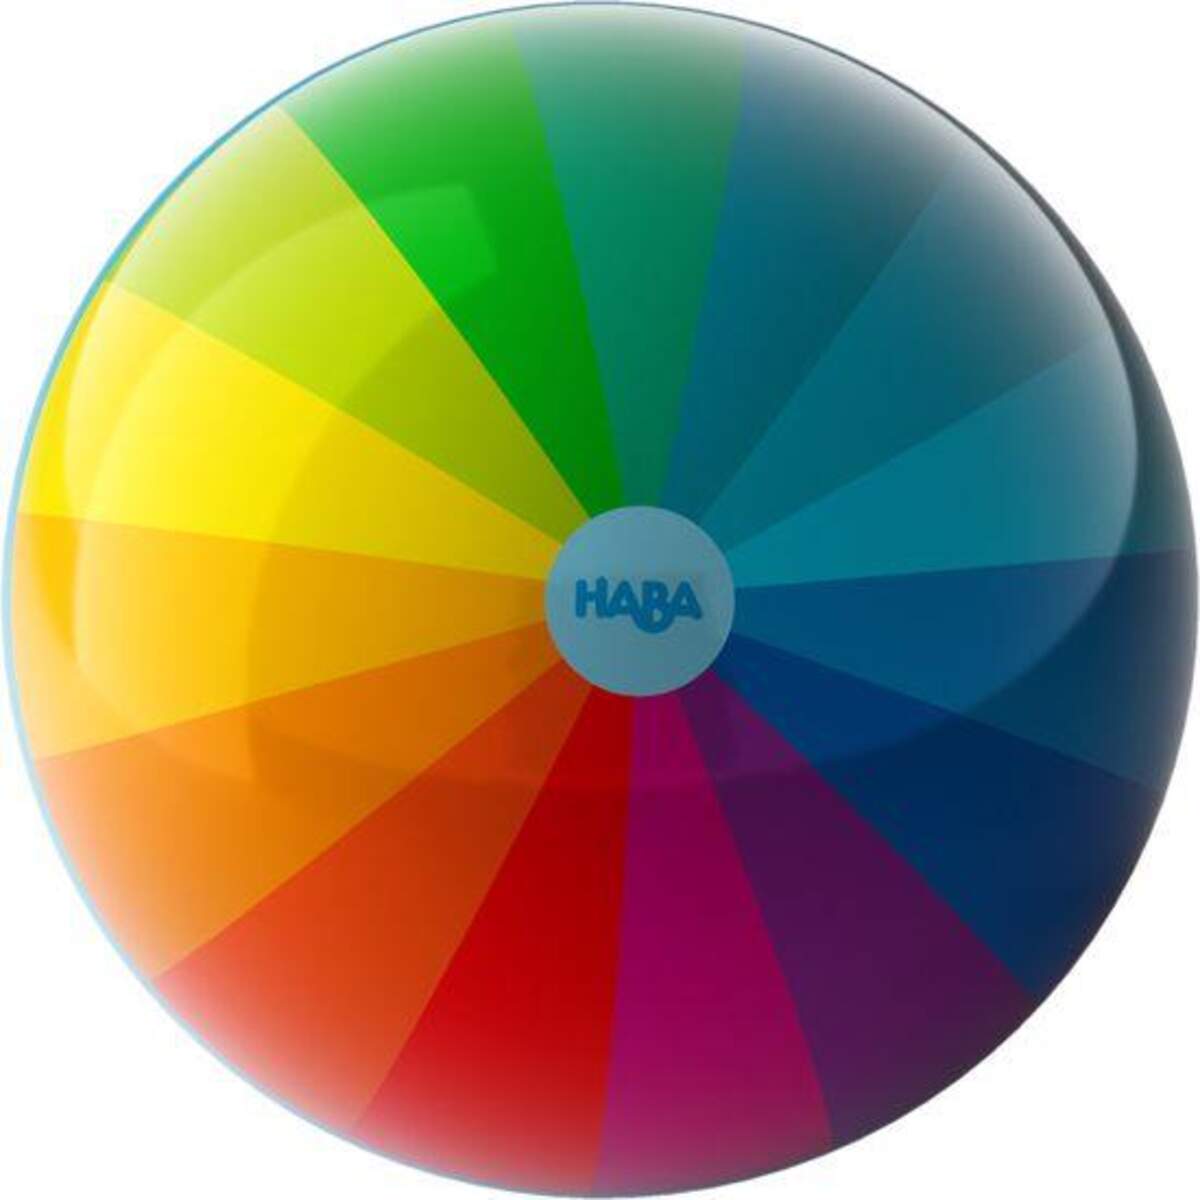 Haba - Ball Regenbogenfarben 11 cm